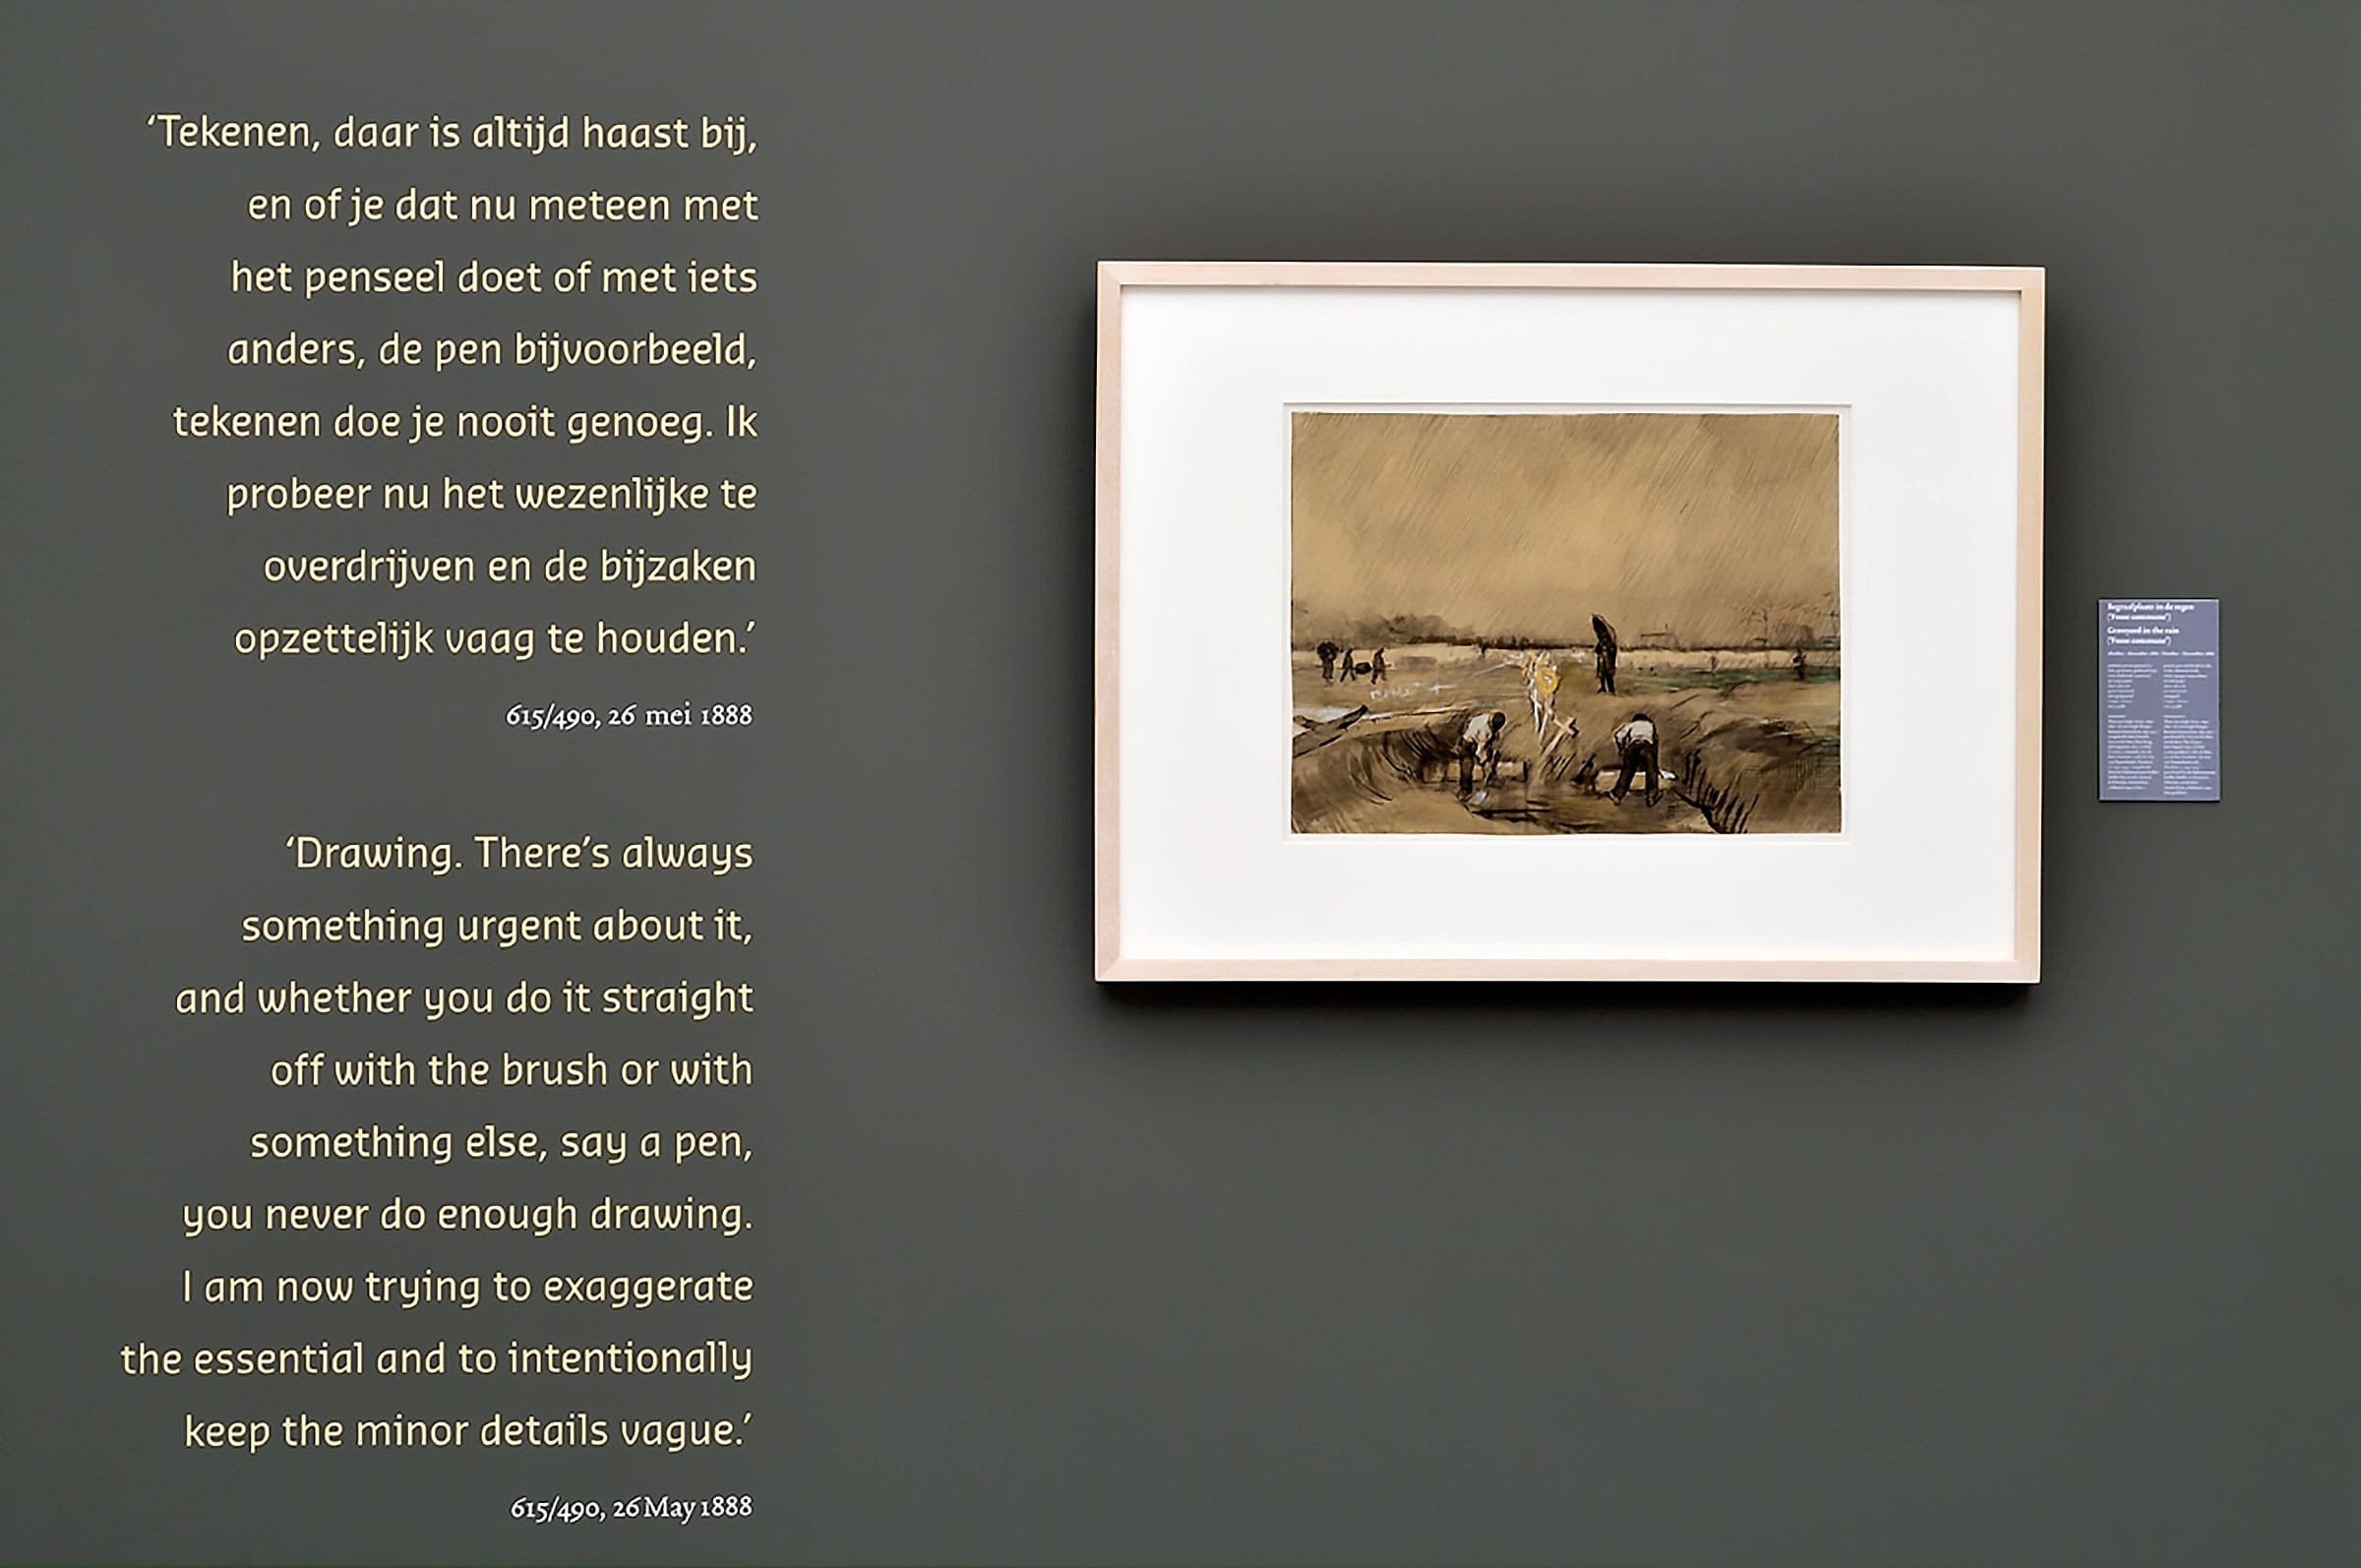 Gebr. Silvestri Kröller-Müller Museum – ‘‘The Riddle of “Double Ingres”: Van Gogh’s drawings in the Kröller-Müller Museum re-examined’’